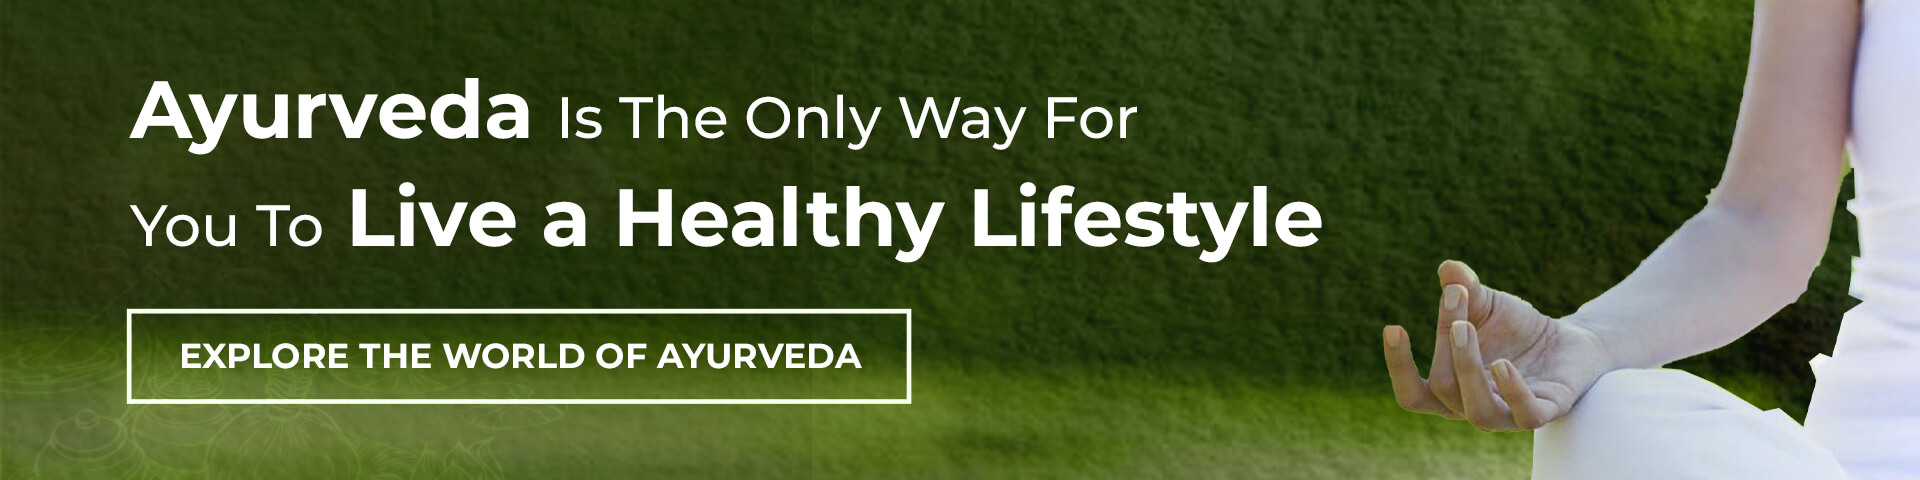 Ayurvedic Lifestyle For Healthy Life